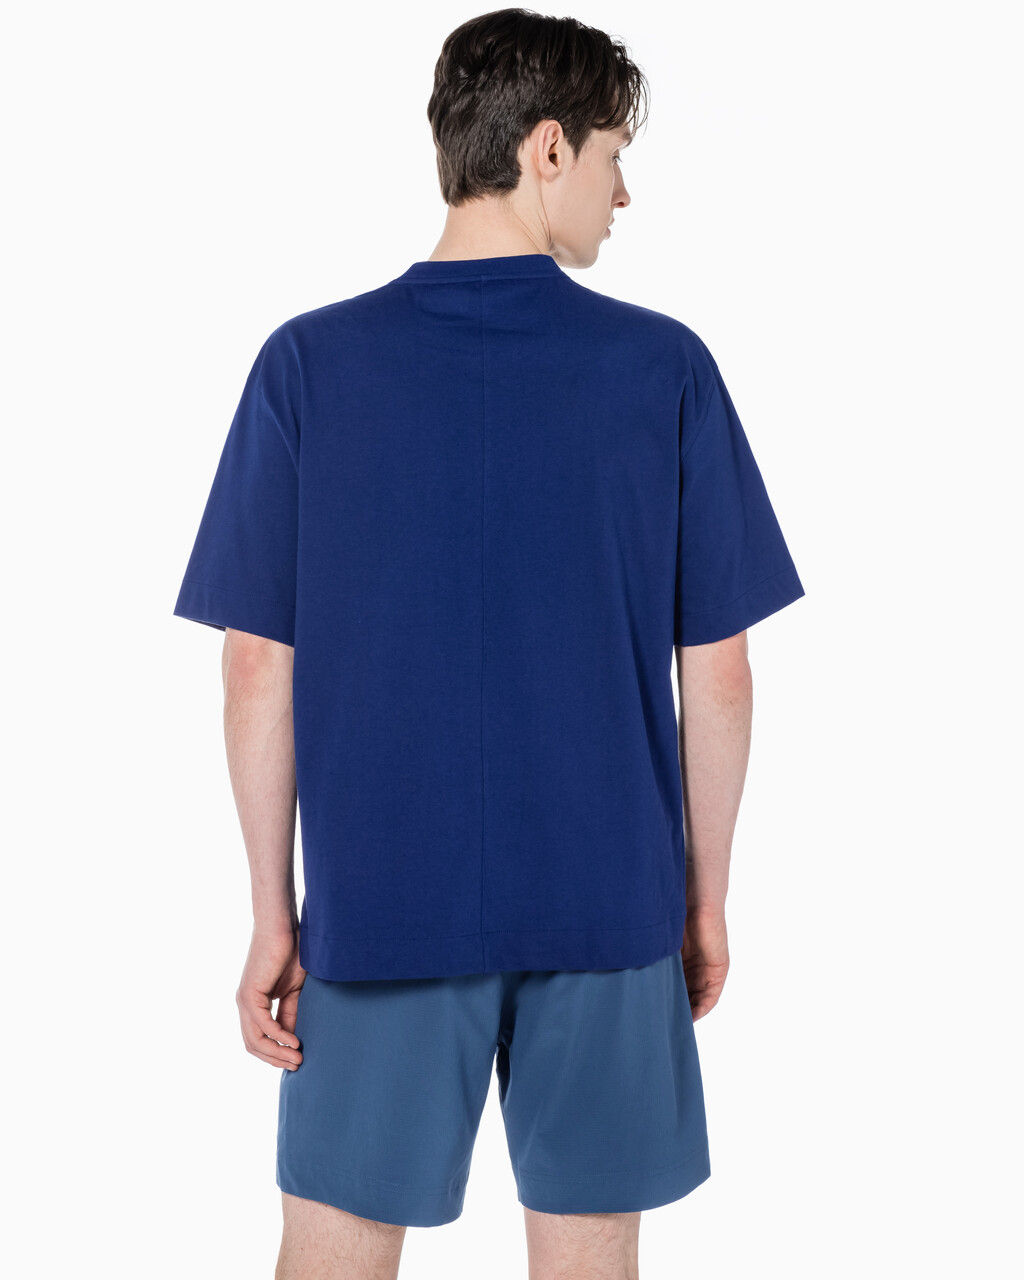 Buy 남성 CK 애슬레틱 릴렉스 핏 반팔 티셔츠 in color CRAYON BLUE